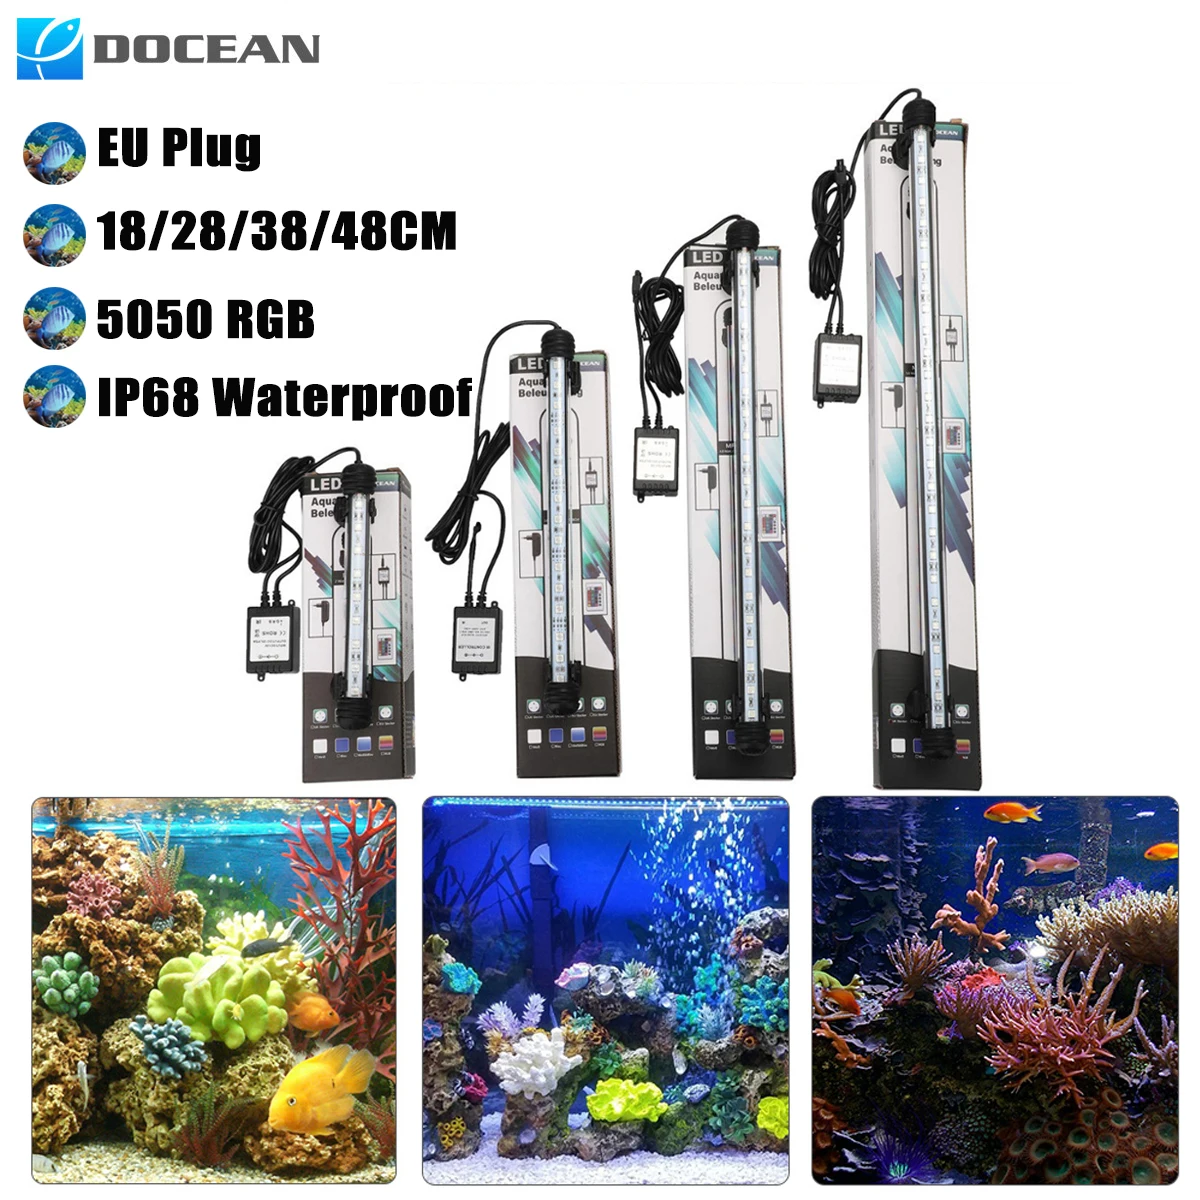 

DOCEAN Aquarium Fish Tank LED Light RGB Colorful Underwater Submersible Light Bar Waterproof 5050 SMD Aquatic Lamp With Remote